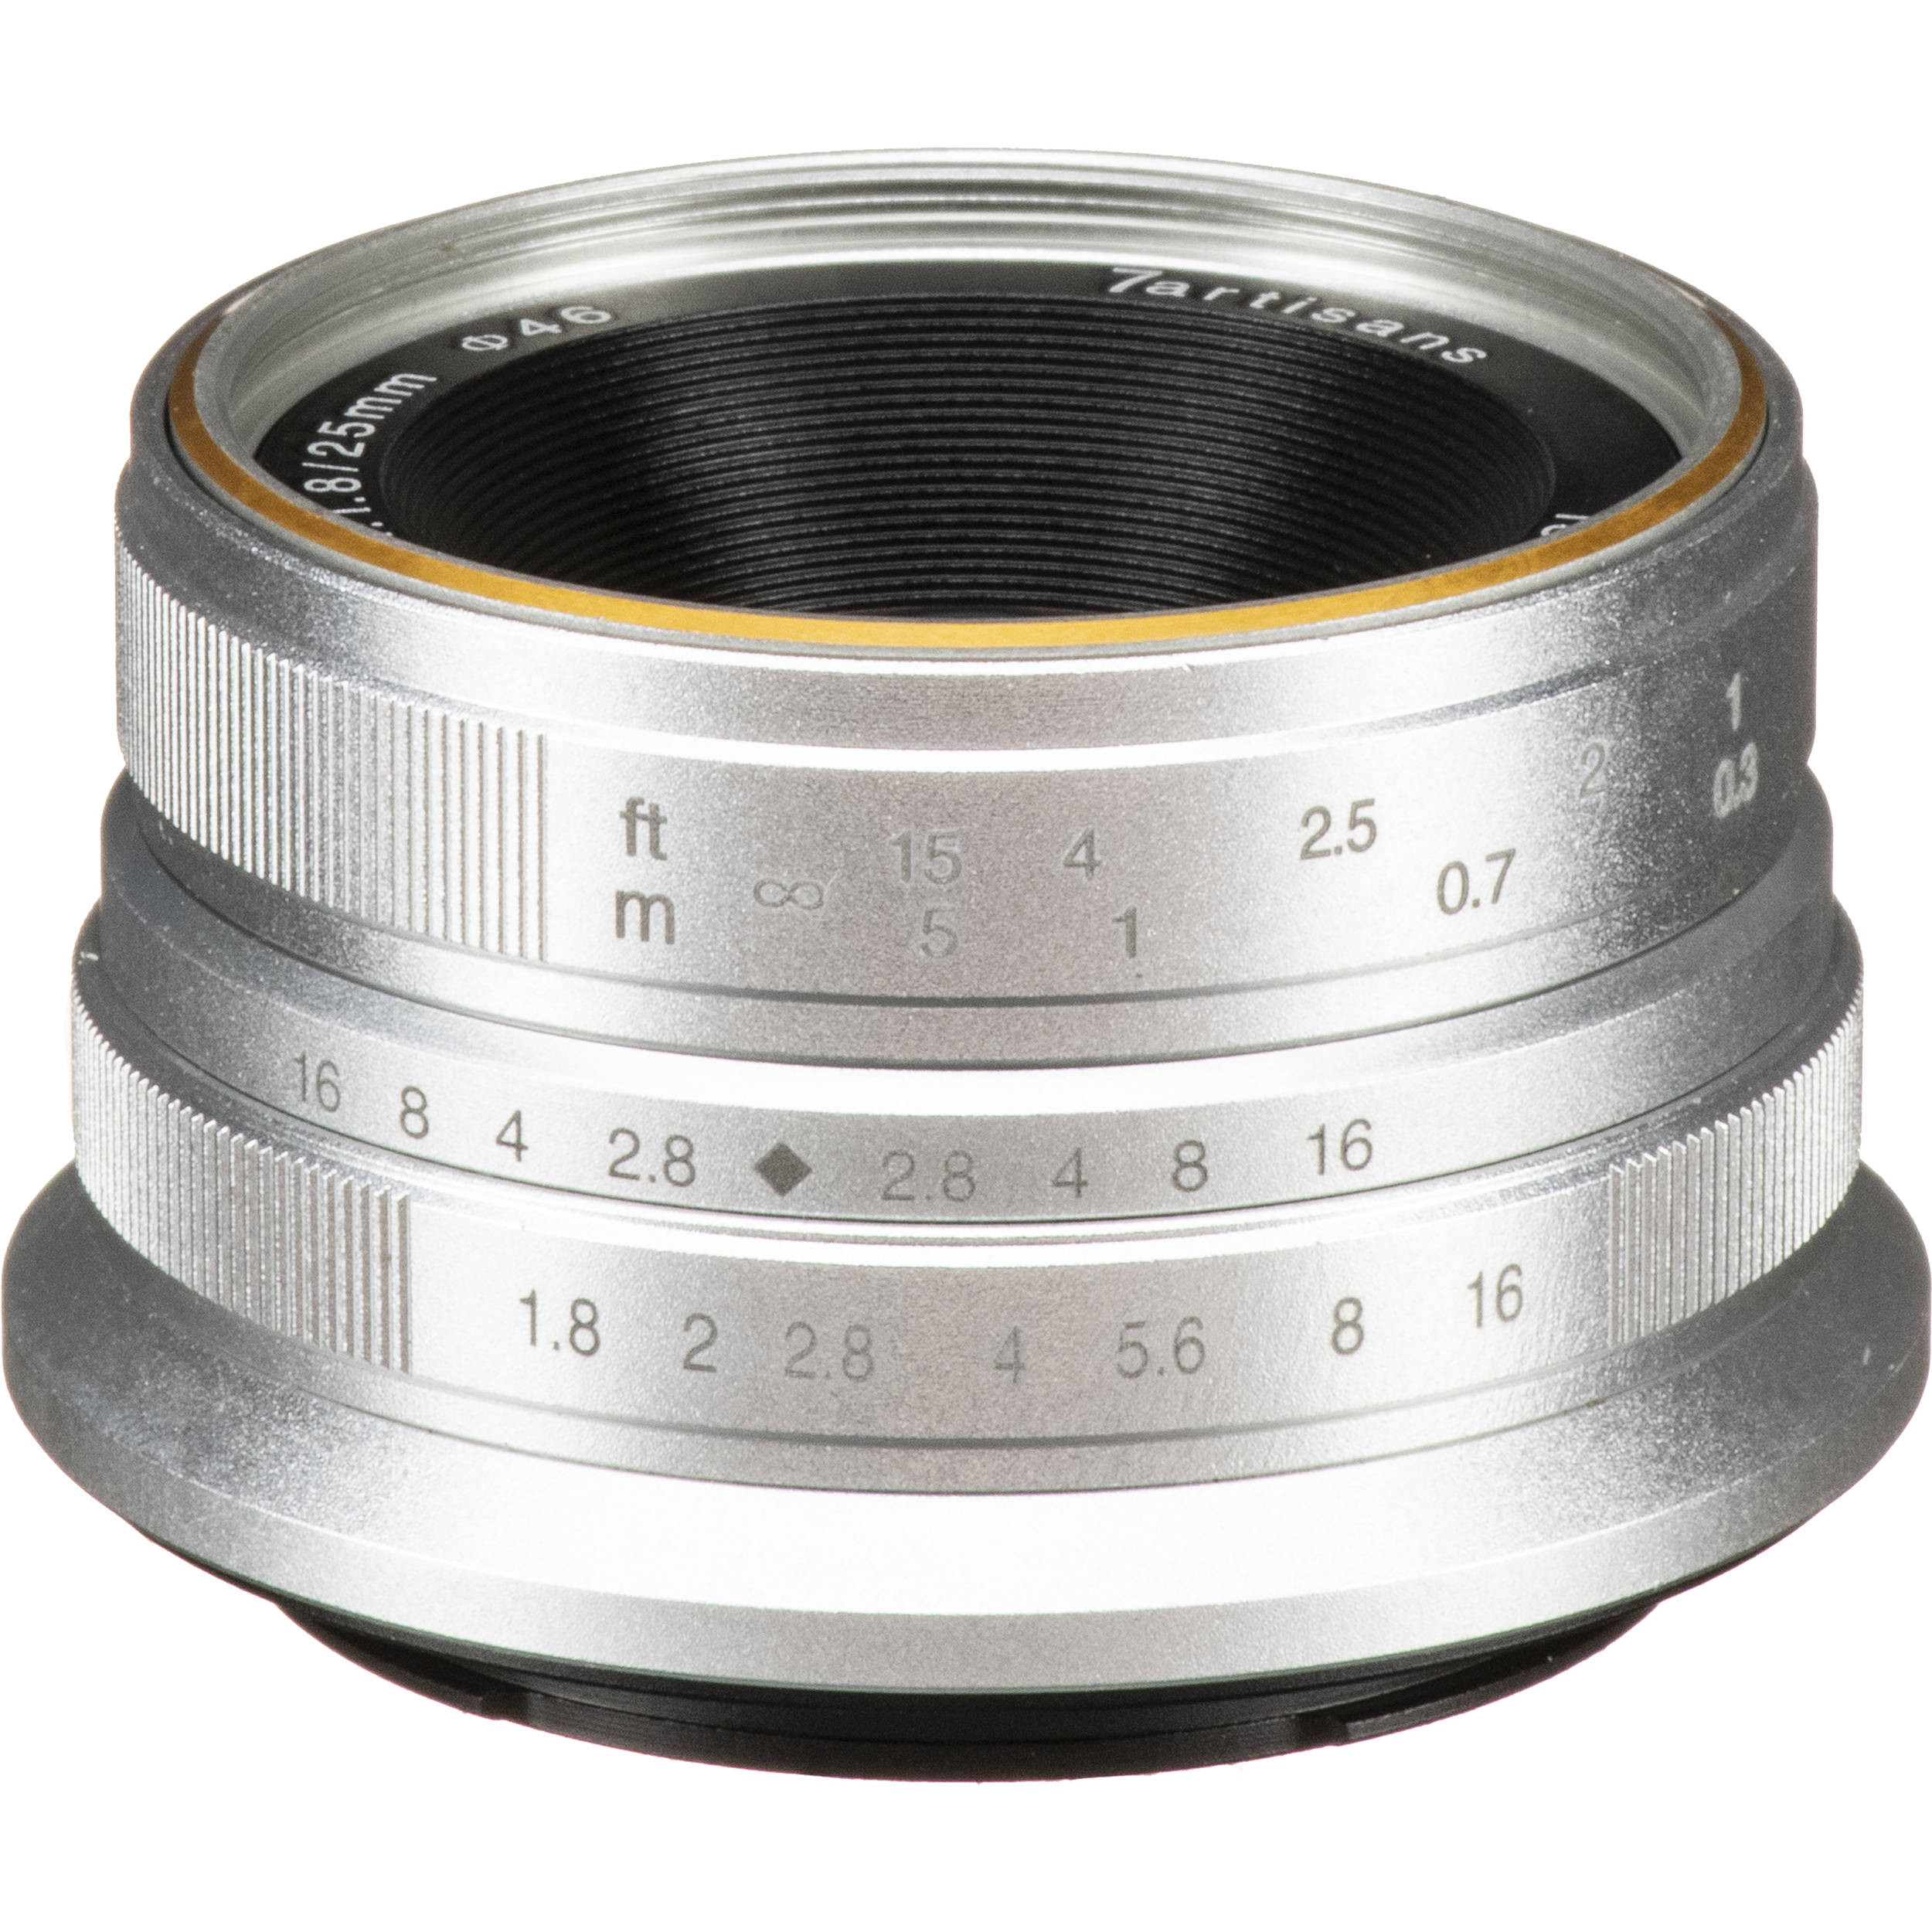 7Artisans 25mm f/1.8 マニュアル 単焦点レンズ シルバー (Fuji X ...